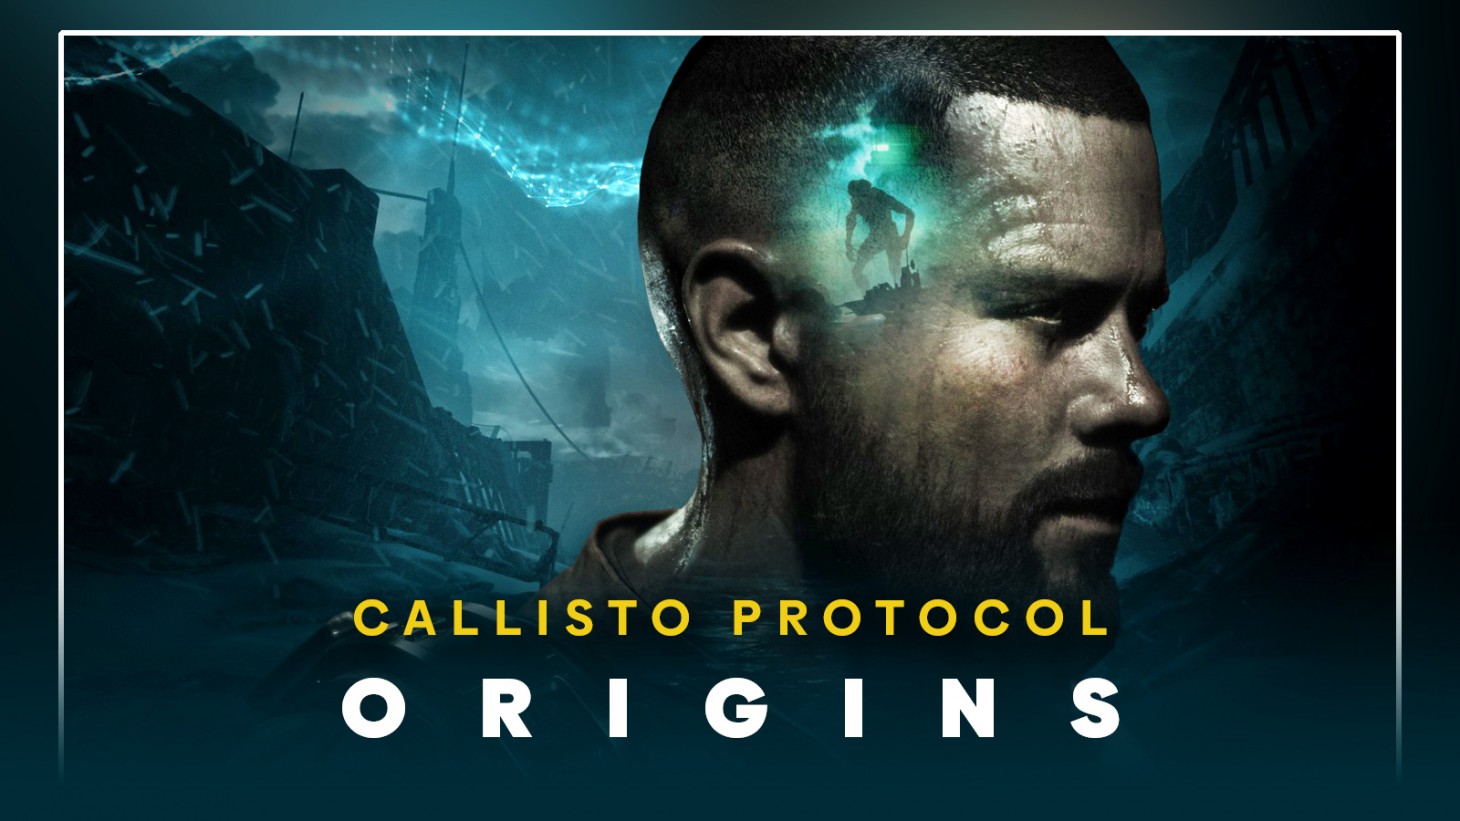 The Callisto Protocol: entrevista com Glen Schofield – PlayStation